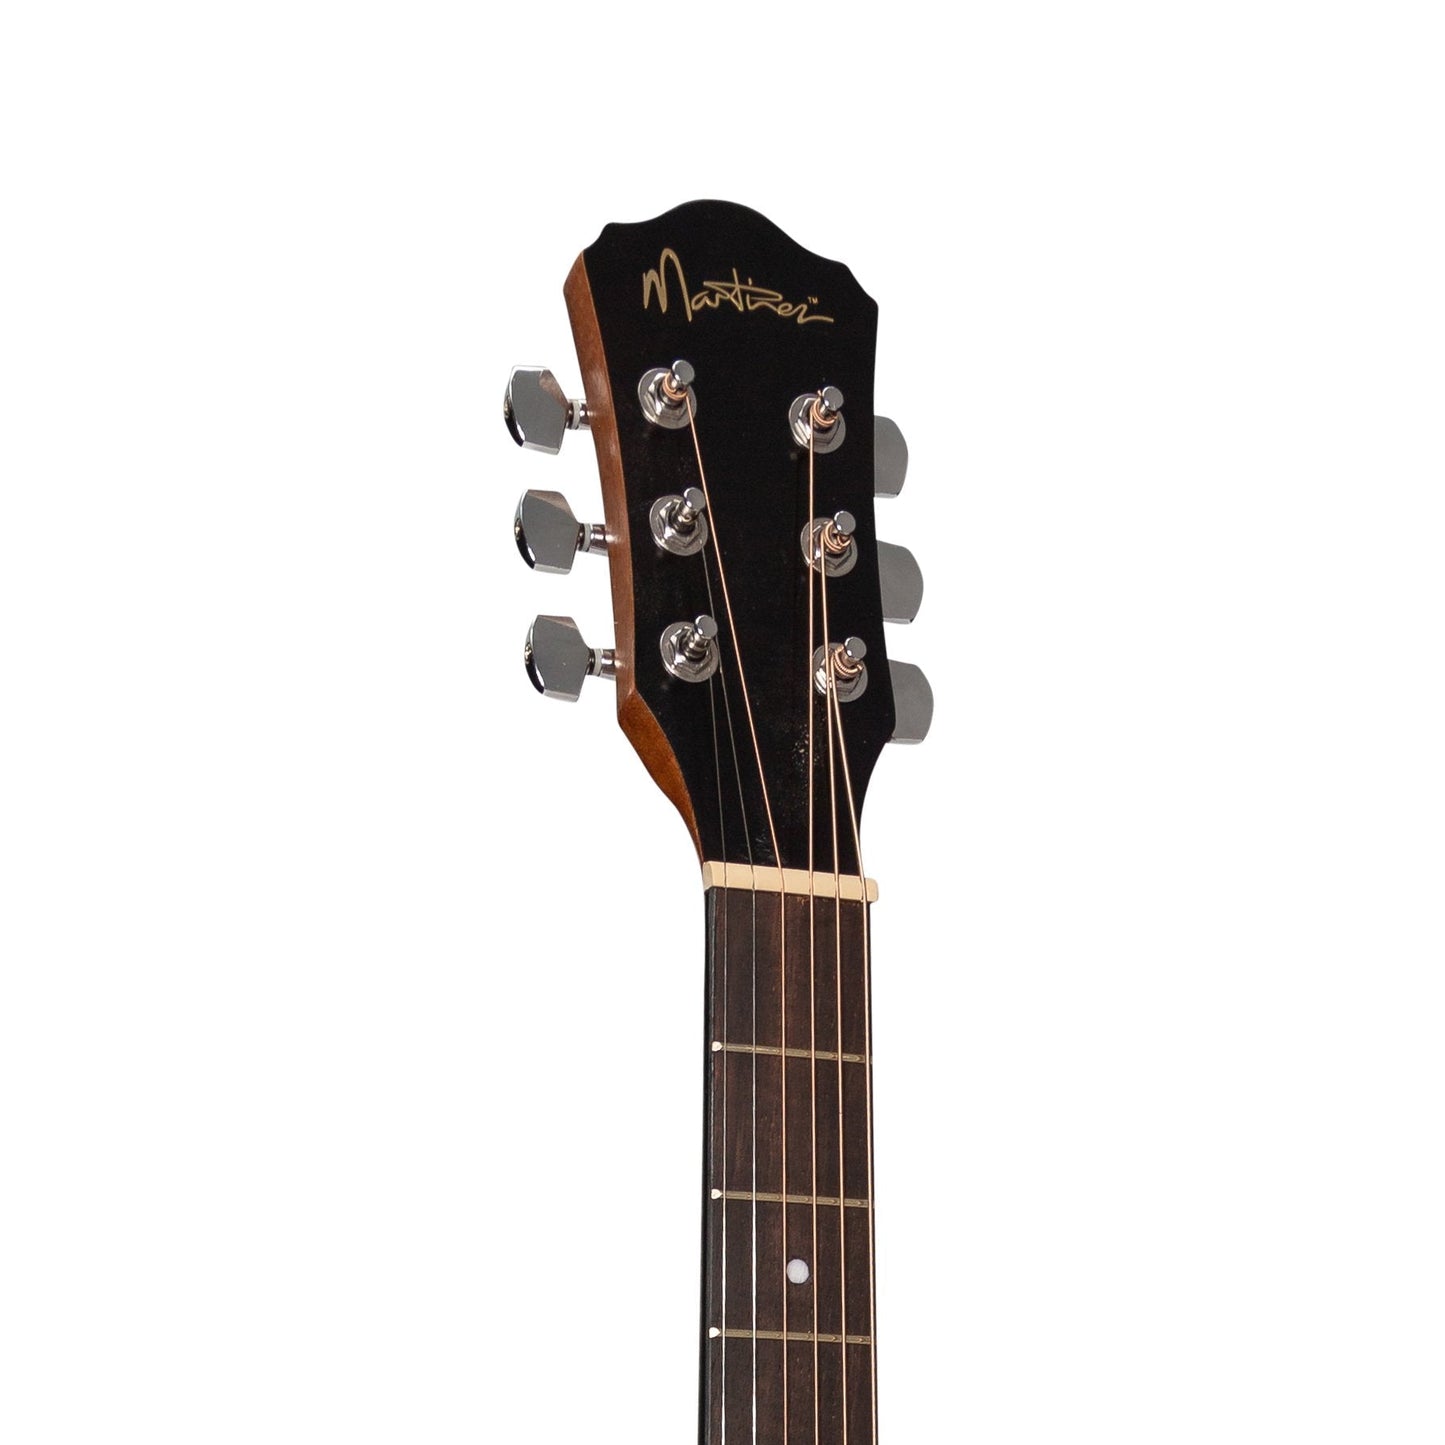 Martinez '41 Series' Left Handed Folk Size Cutaway Acoustic-Electric Guitar (Mahogany)